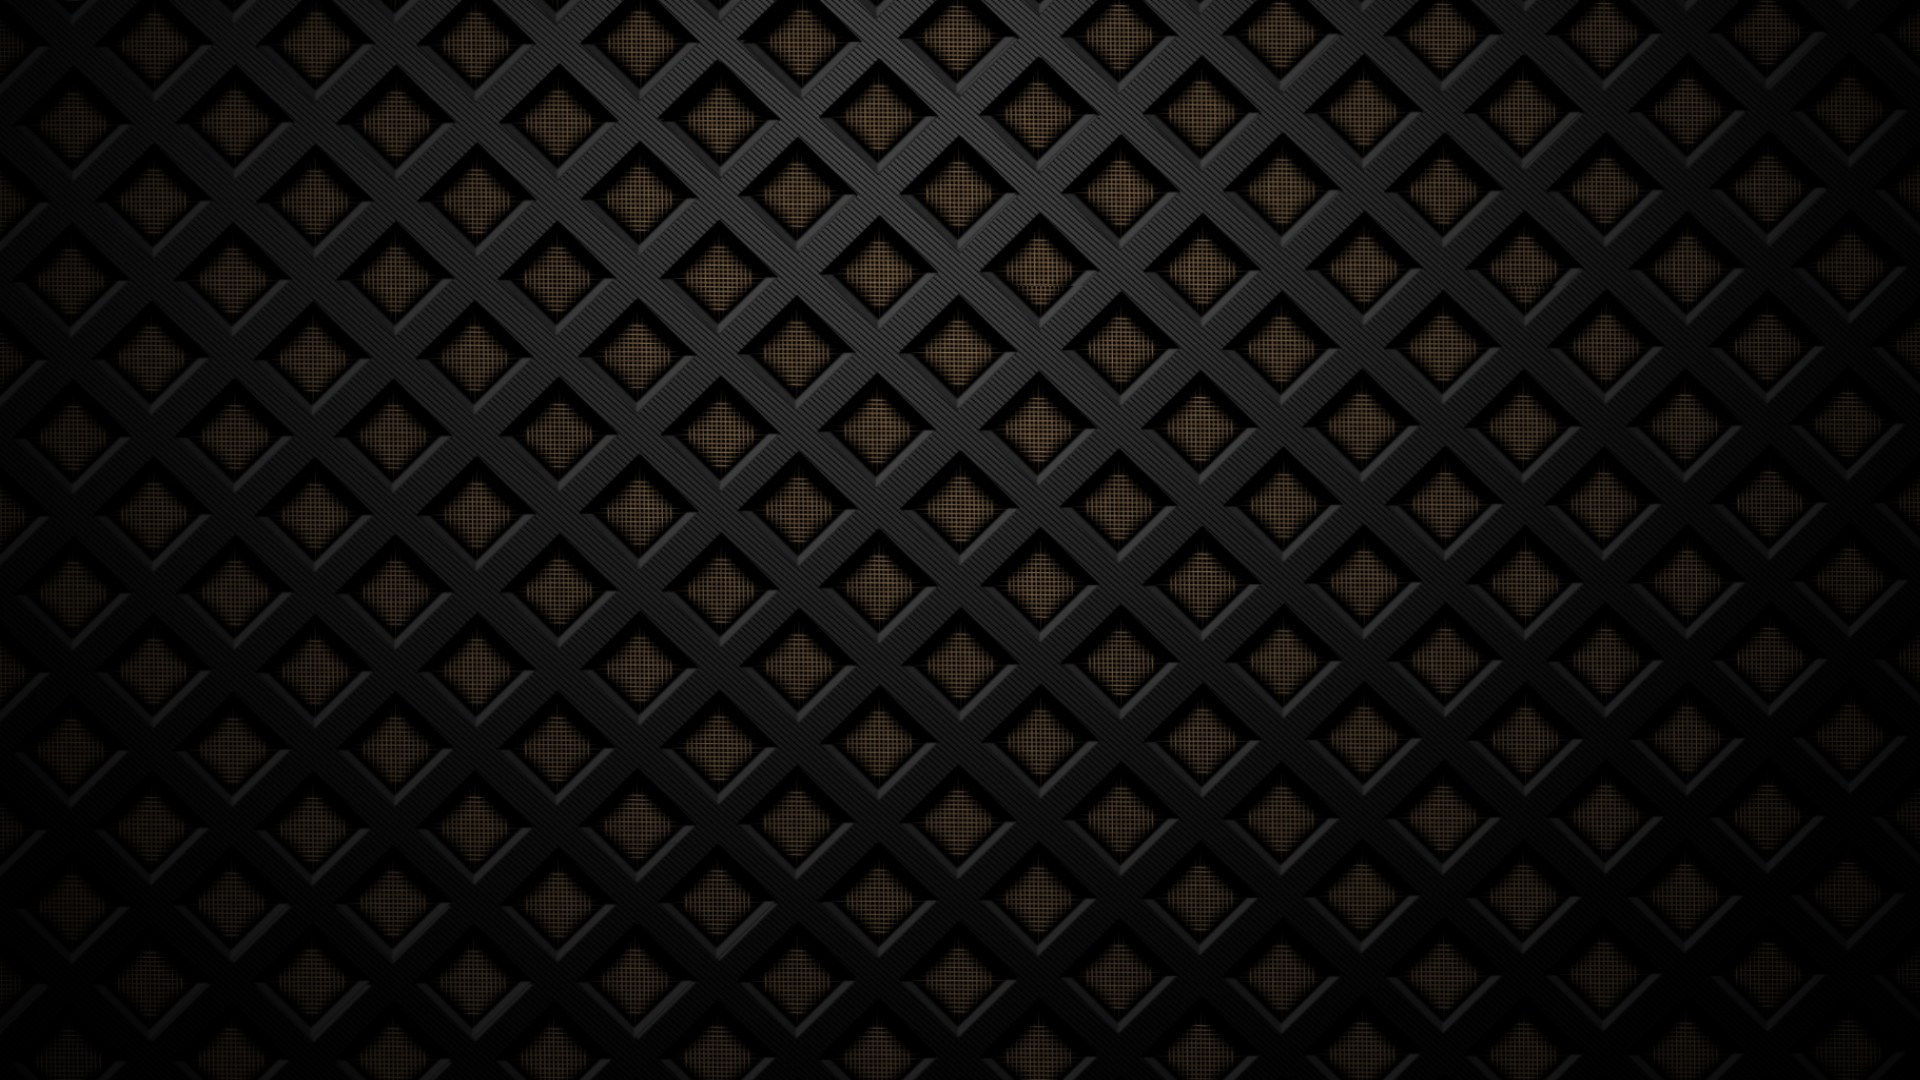 1920x1080, Texture Wallpapers Hd Victorian Data Id - Black Leather Wallpaper  4k - 1920x1080 Wallpaper 